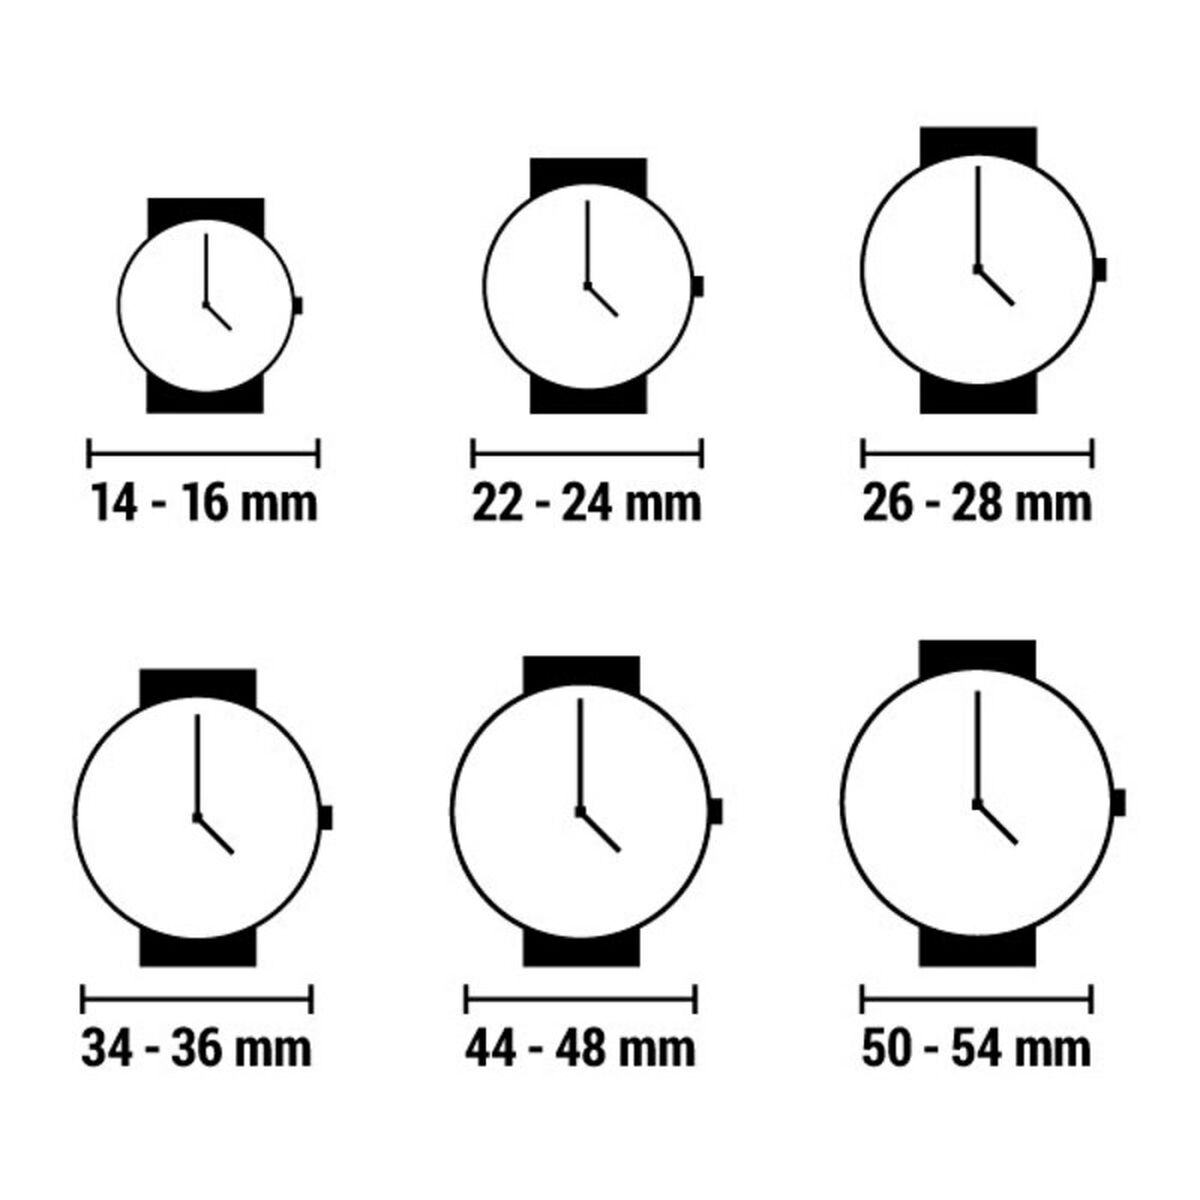 Horloge Heren Guess X59005G1S (Ø 42 mm)